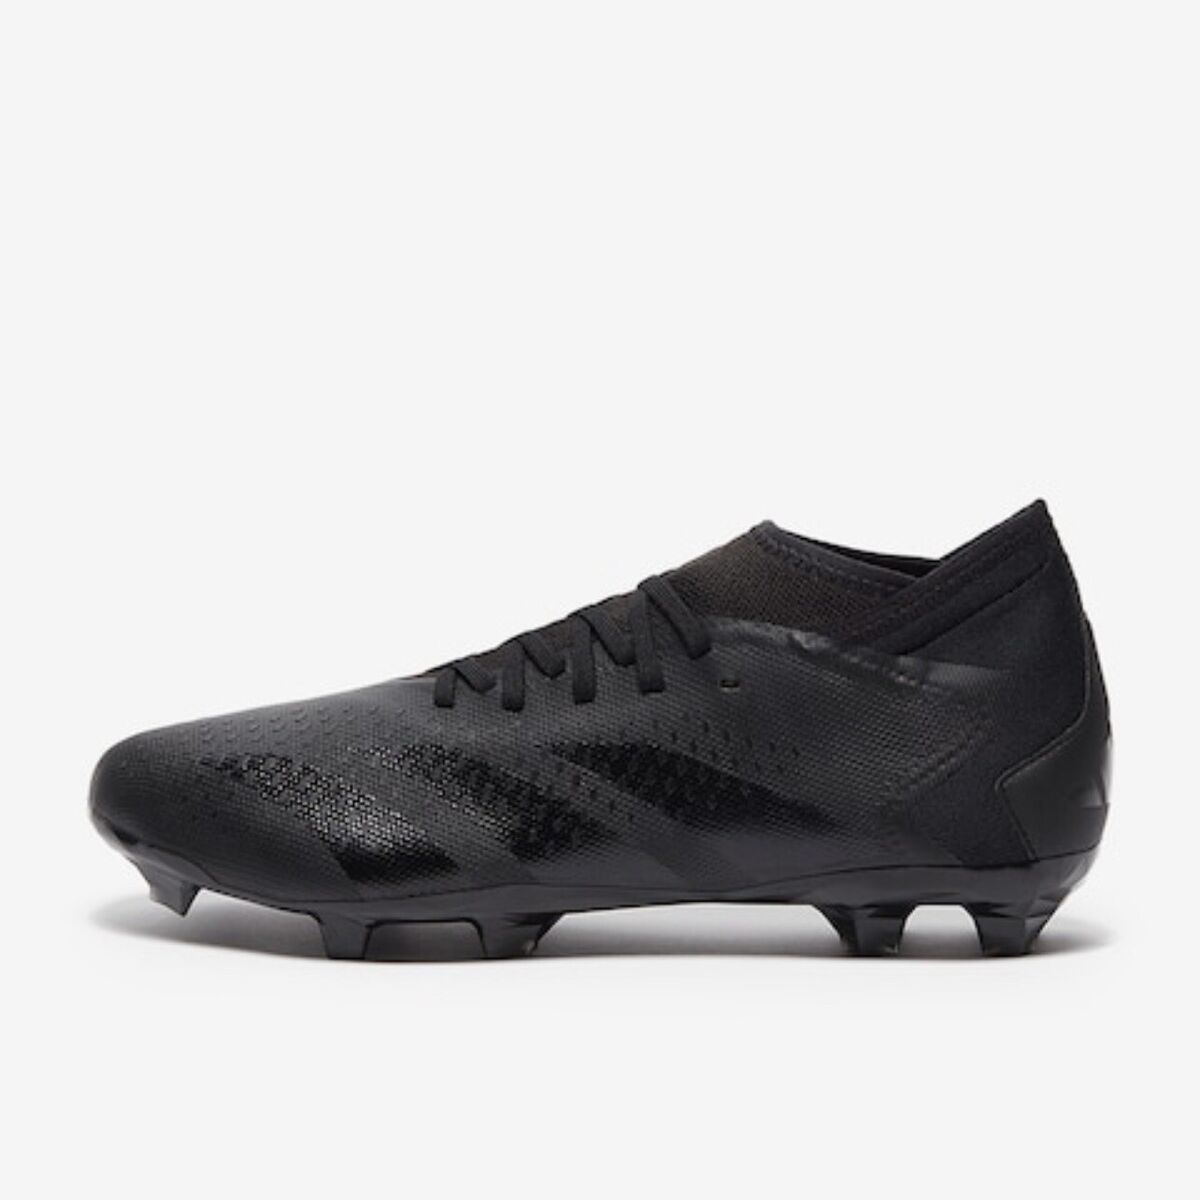 Adidas Predator Accuracy 3 FG Men's Soccer Football Shoe Black Cleats #593  | eBay